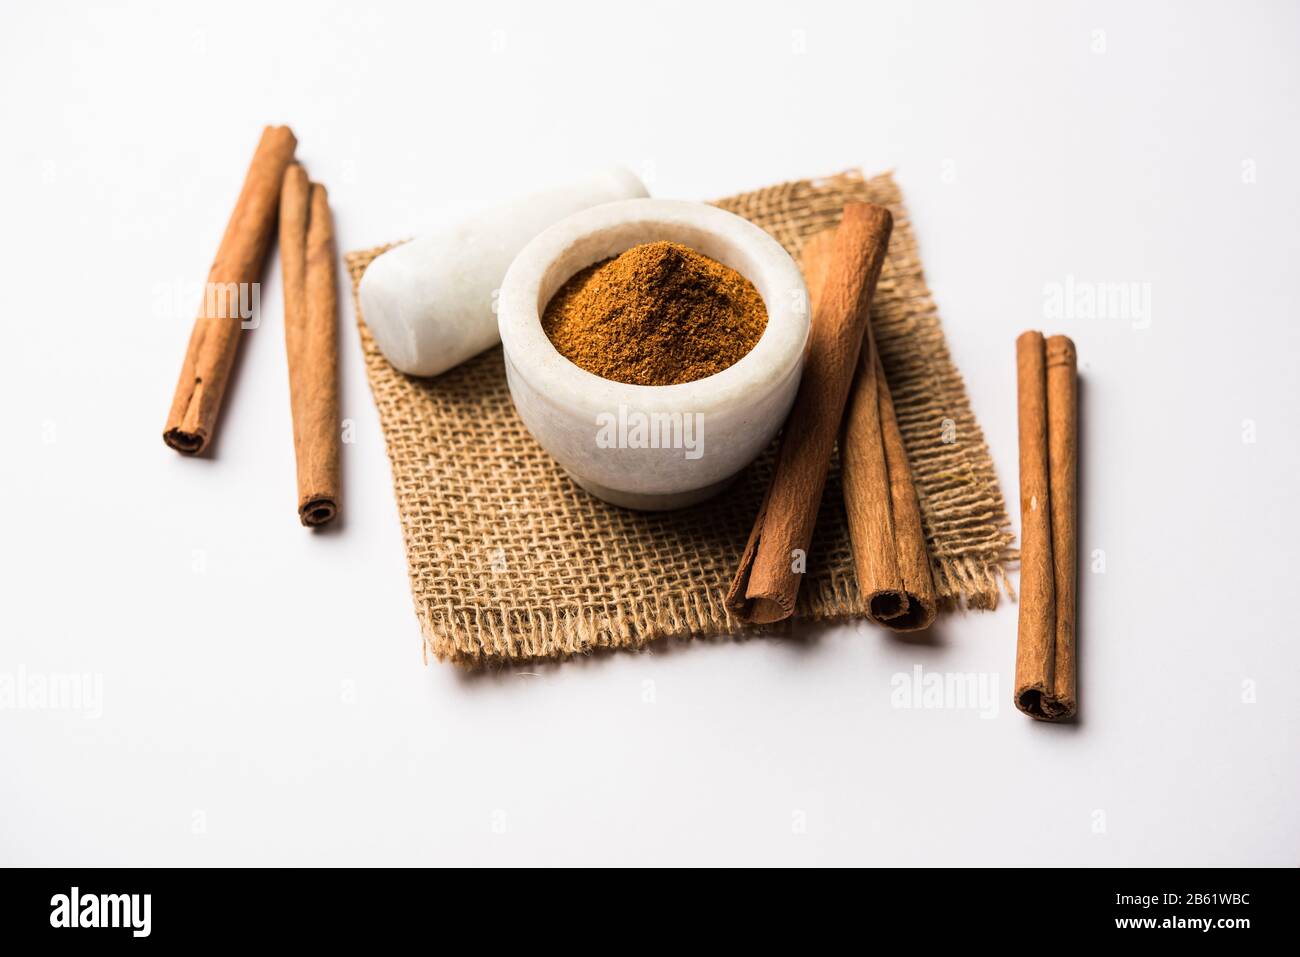 Powder cinnamon and sticks also known as Dalchini or Dalcheenee masala from India, selective focus Stock Photo